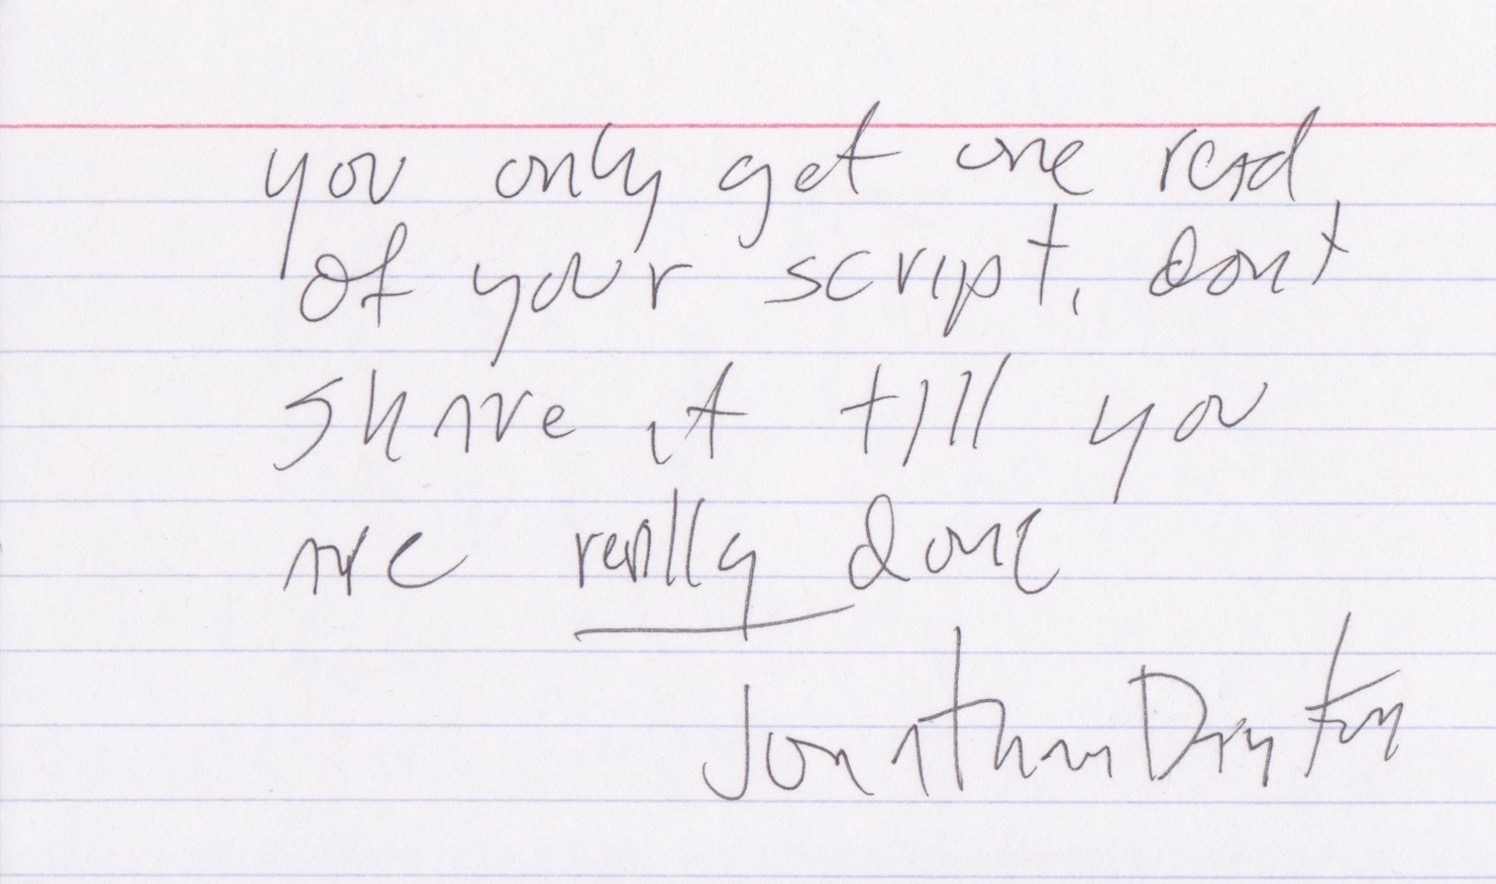 Jonathan Dayton